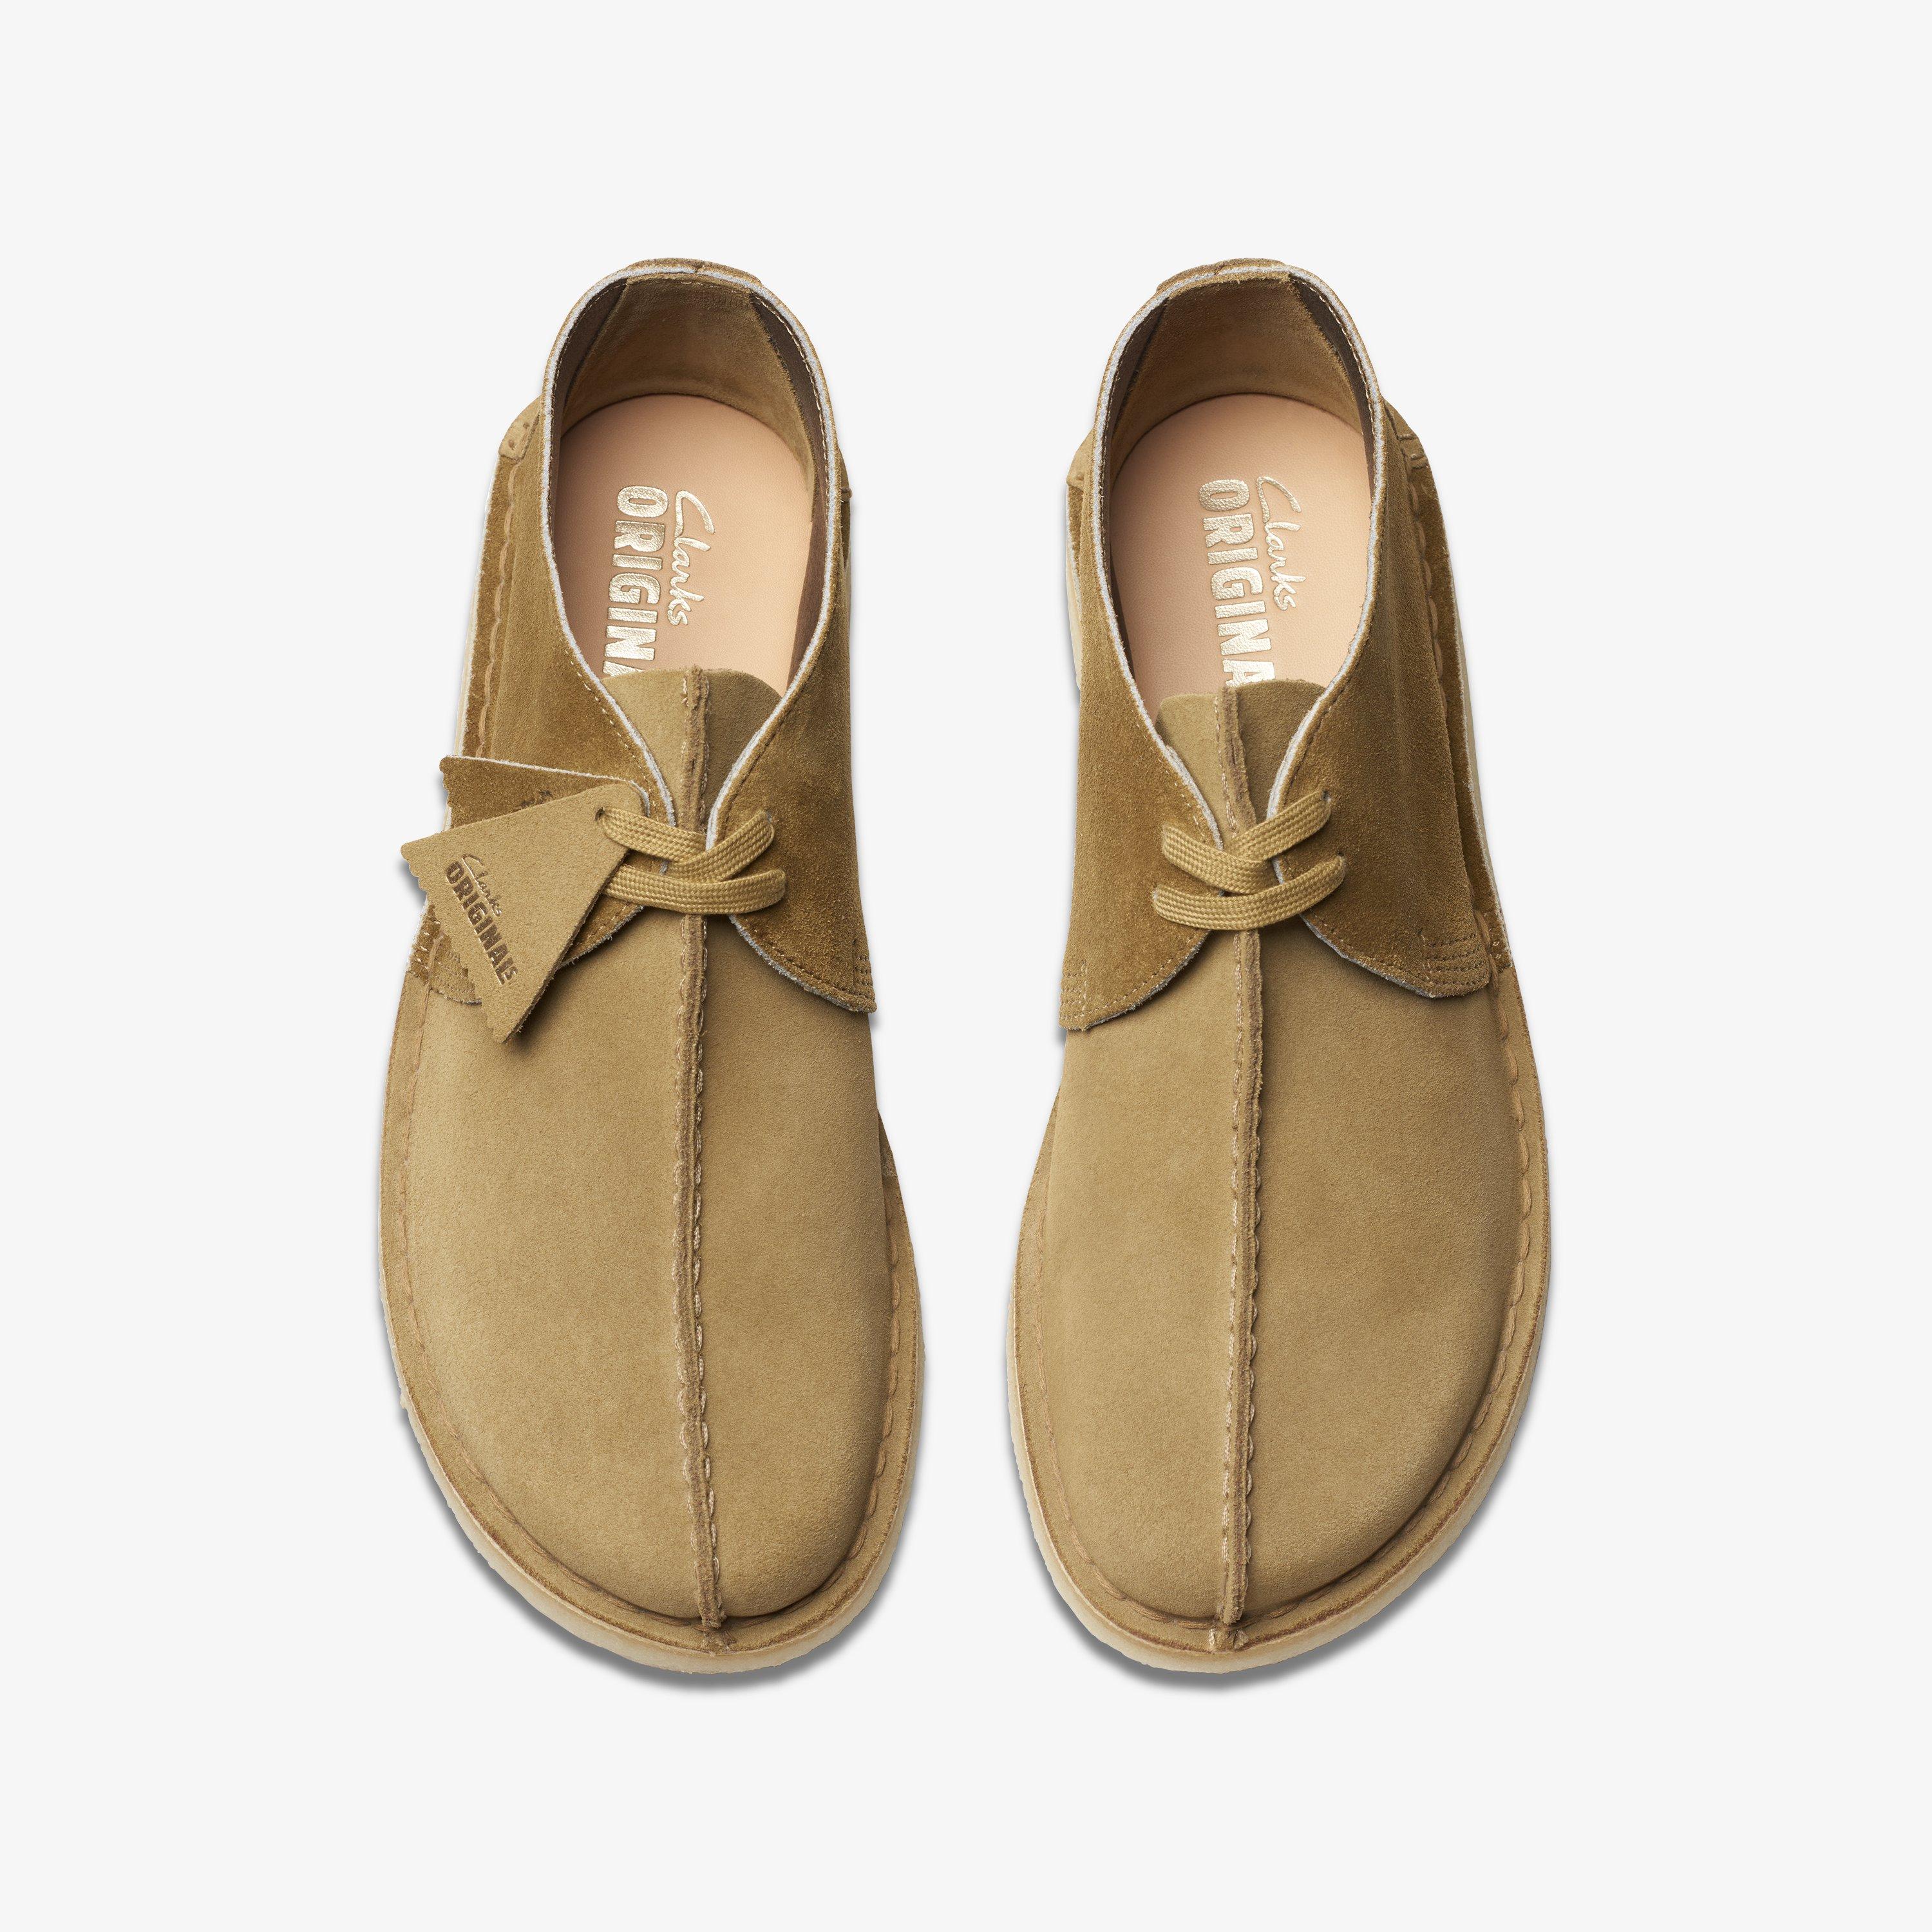 Men's Shoes Clarks Originals DESERT BOOT Leather Chukkas 48539 TAN